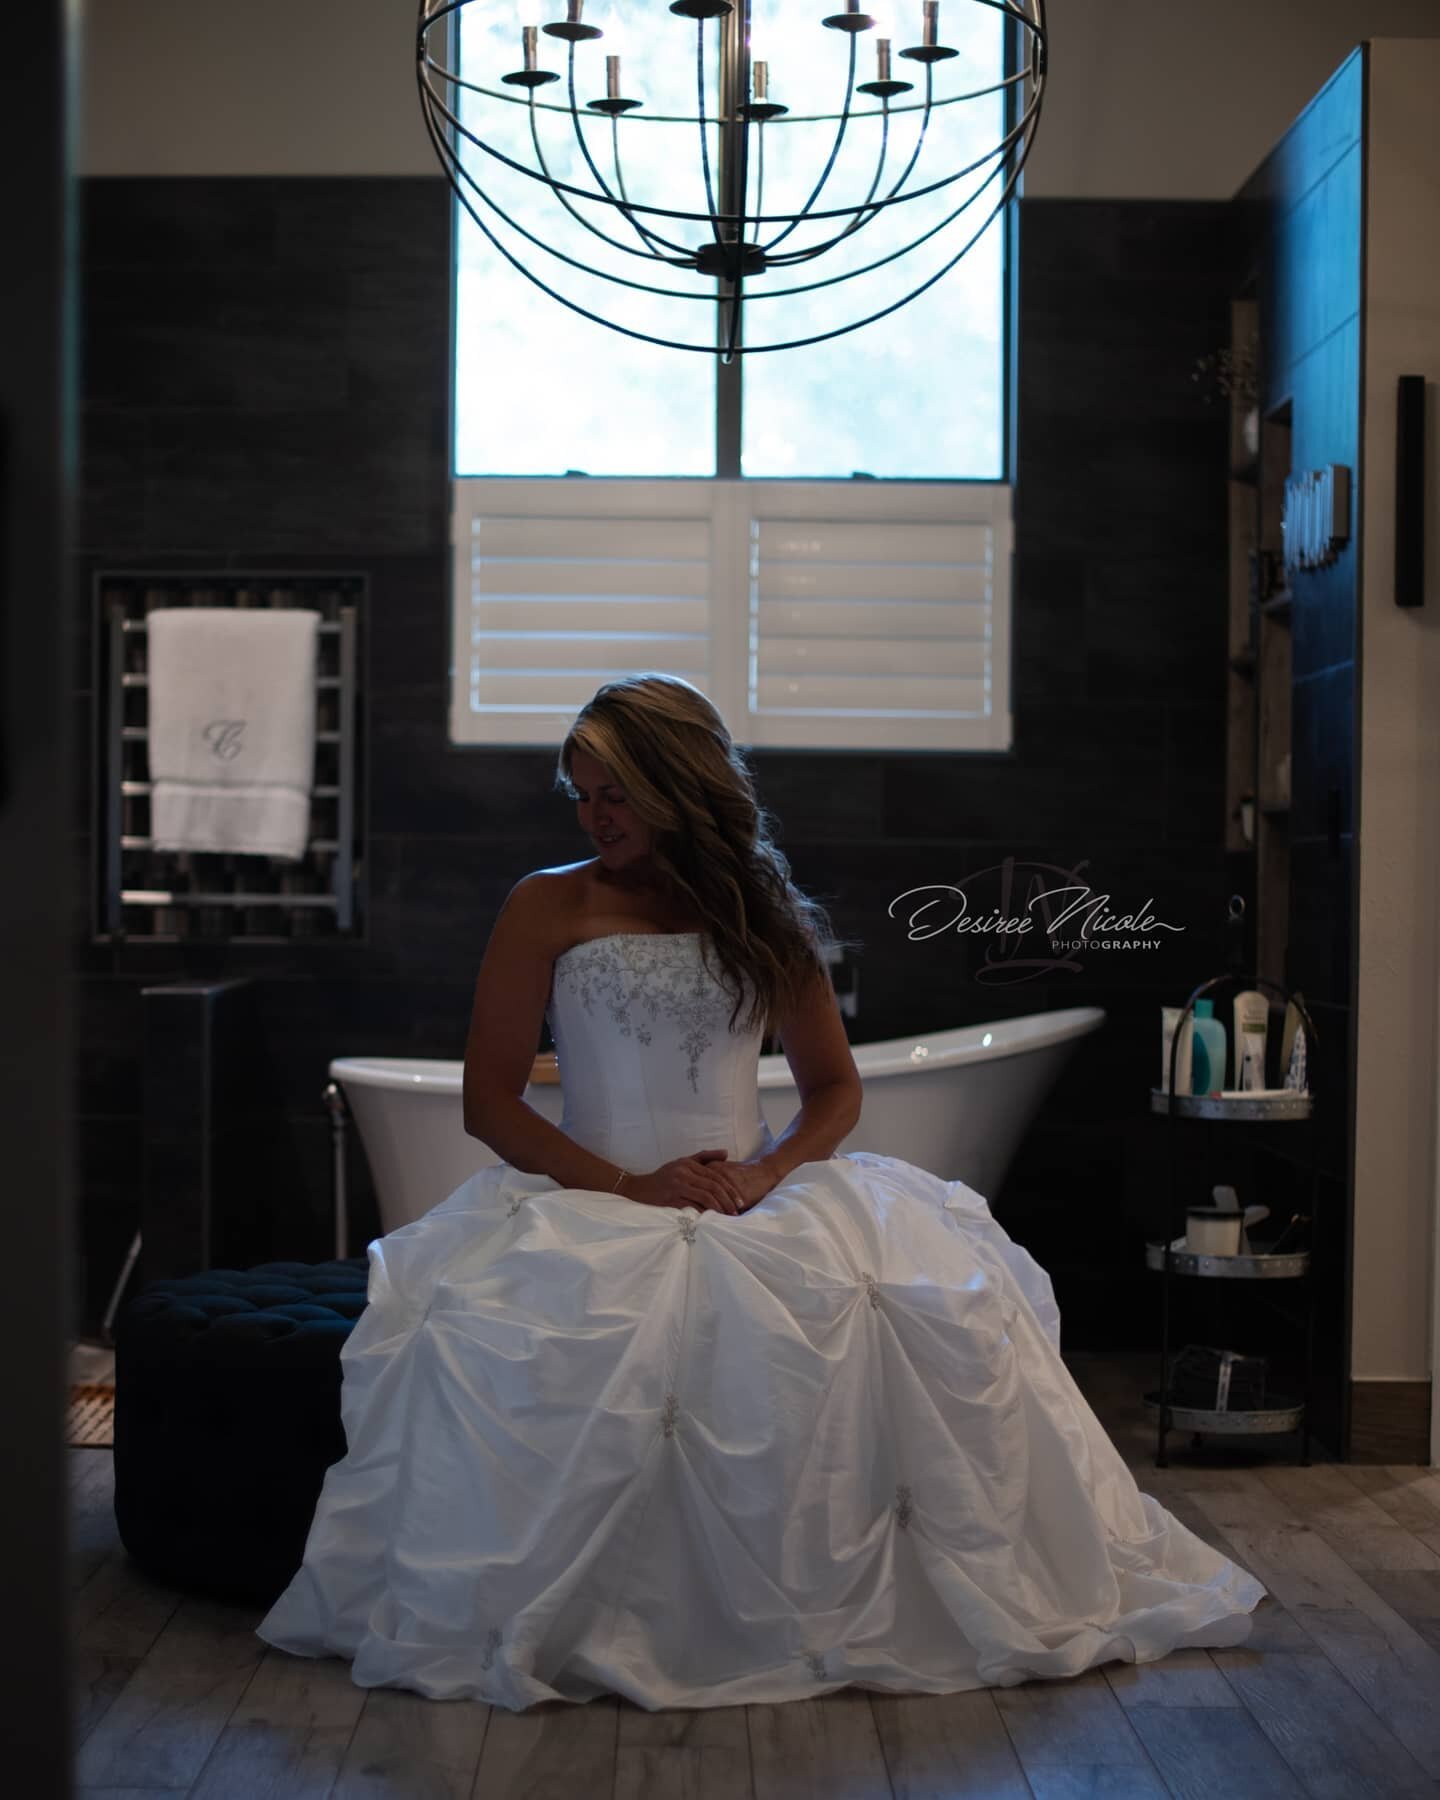 || SWIPE TO EDIT➡️ ||
Such a Beautiful Bride🖤✨
.
.
.
.

#bride #desireenicolephotography #floridaweddingphotographer #wedding #beautiful